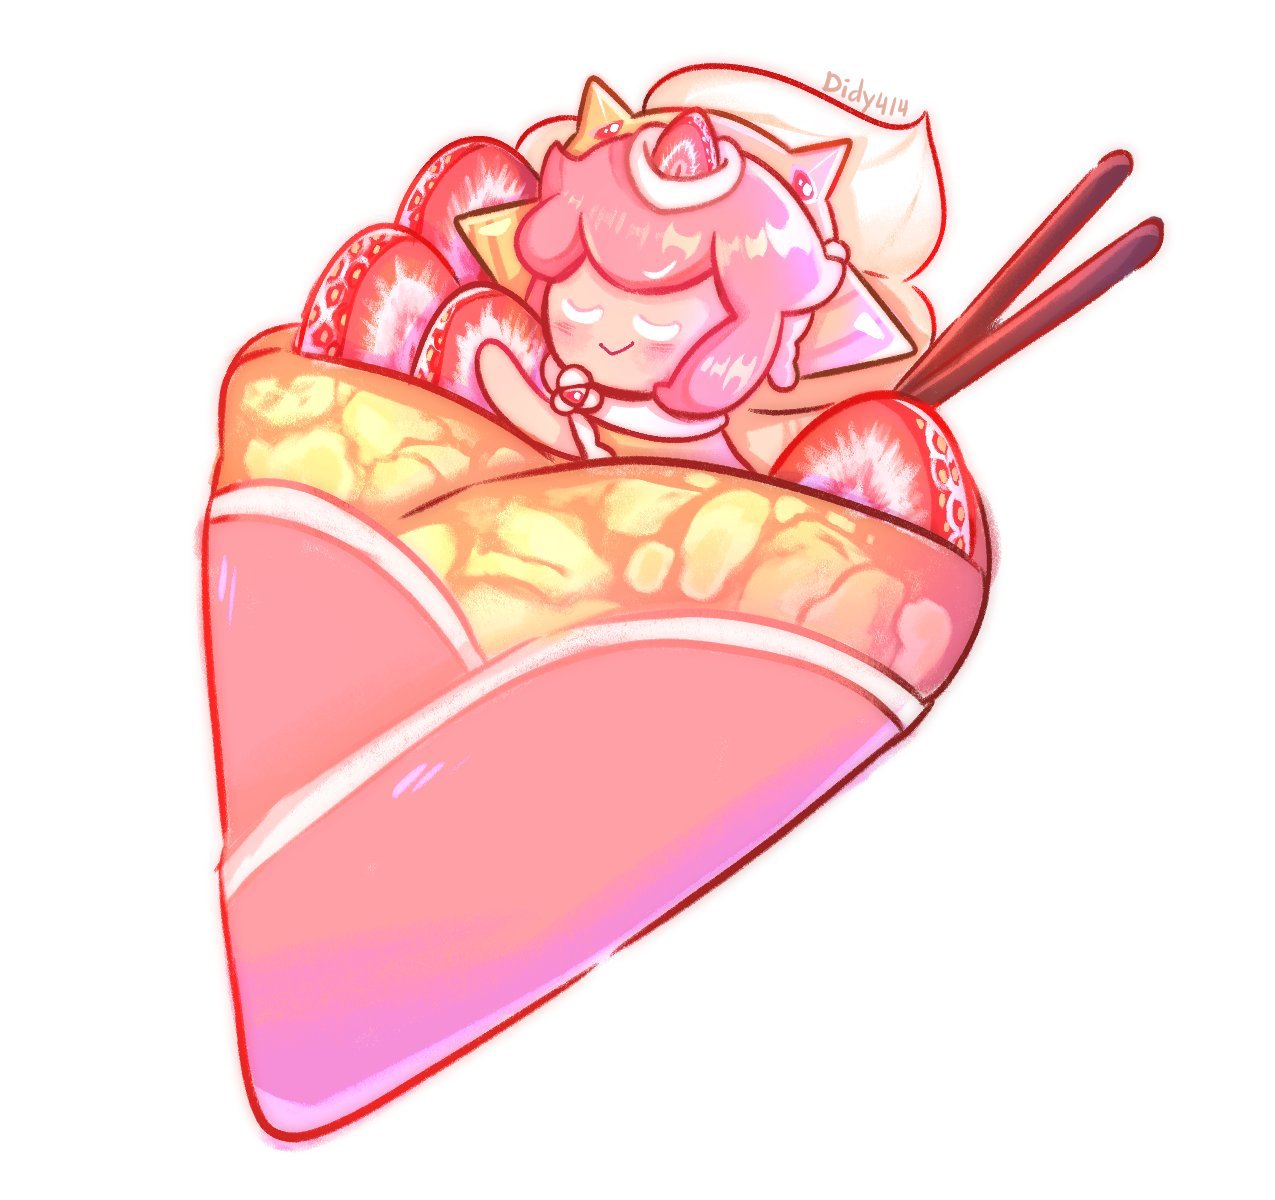 Strawberry Crepe Cookie Run: Kingdom Anime Image Board